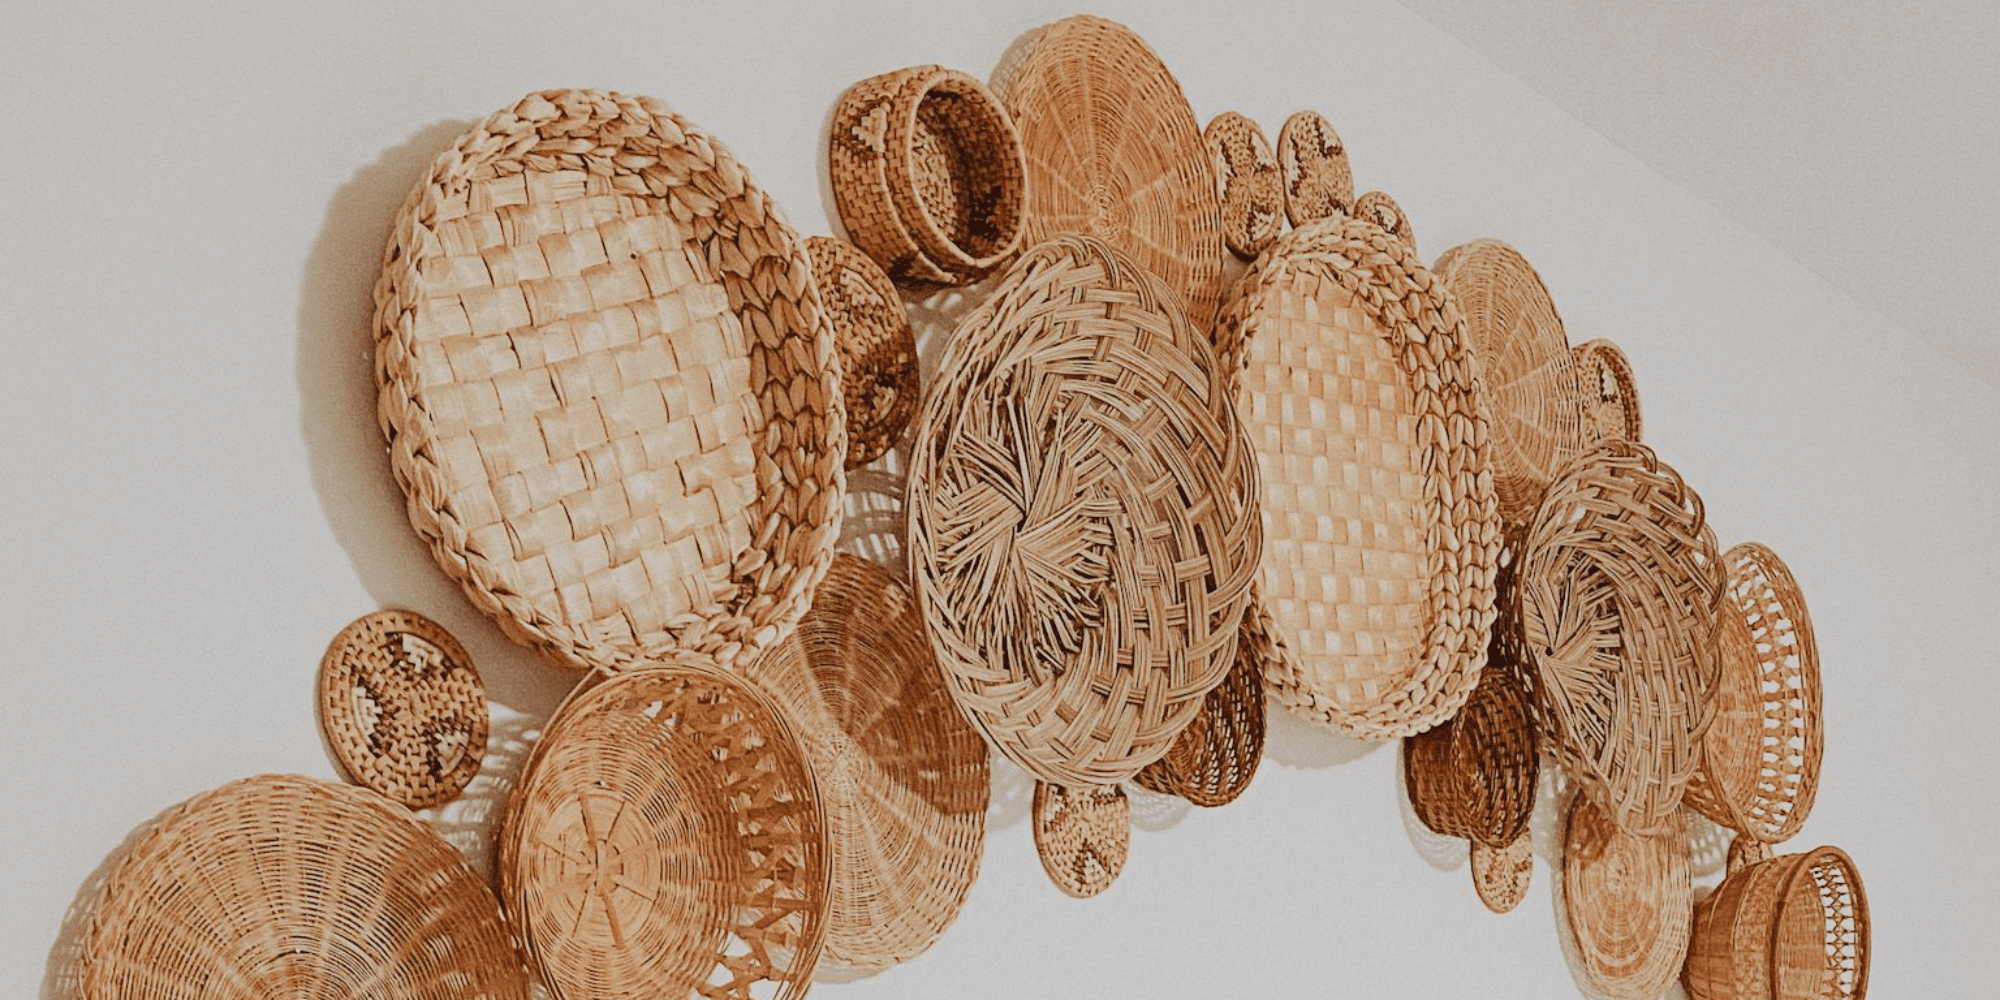 baskets on wall decor